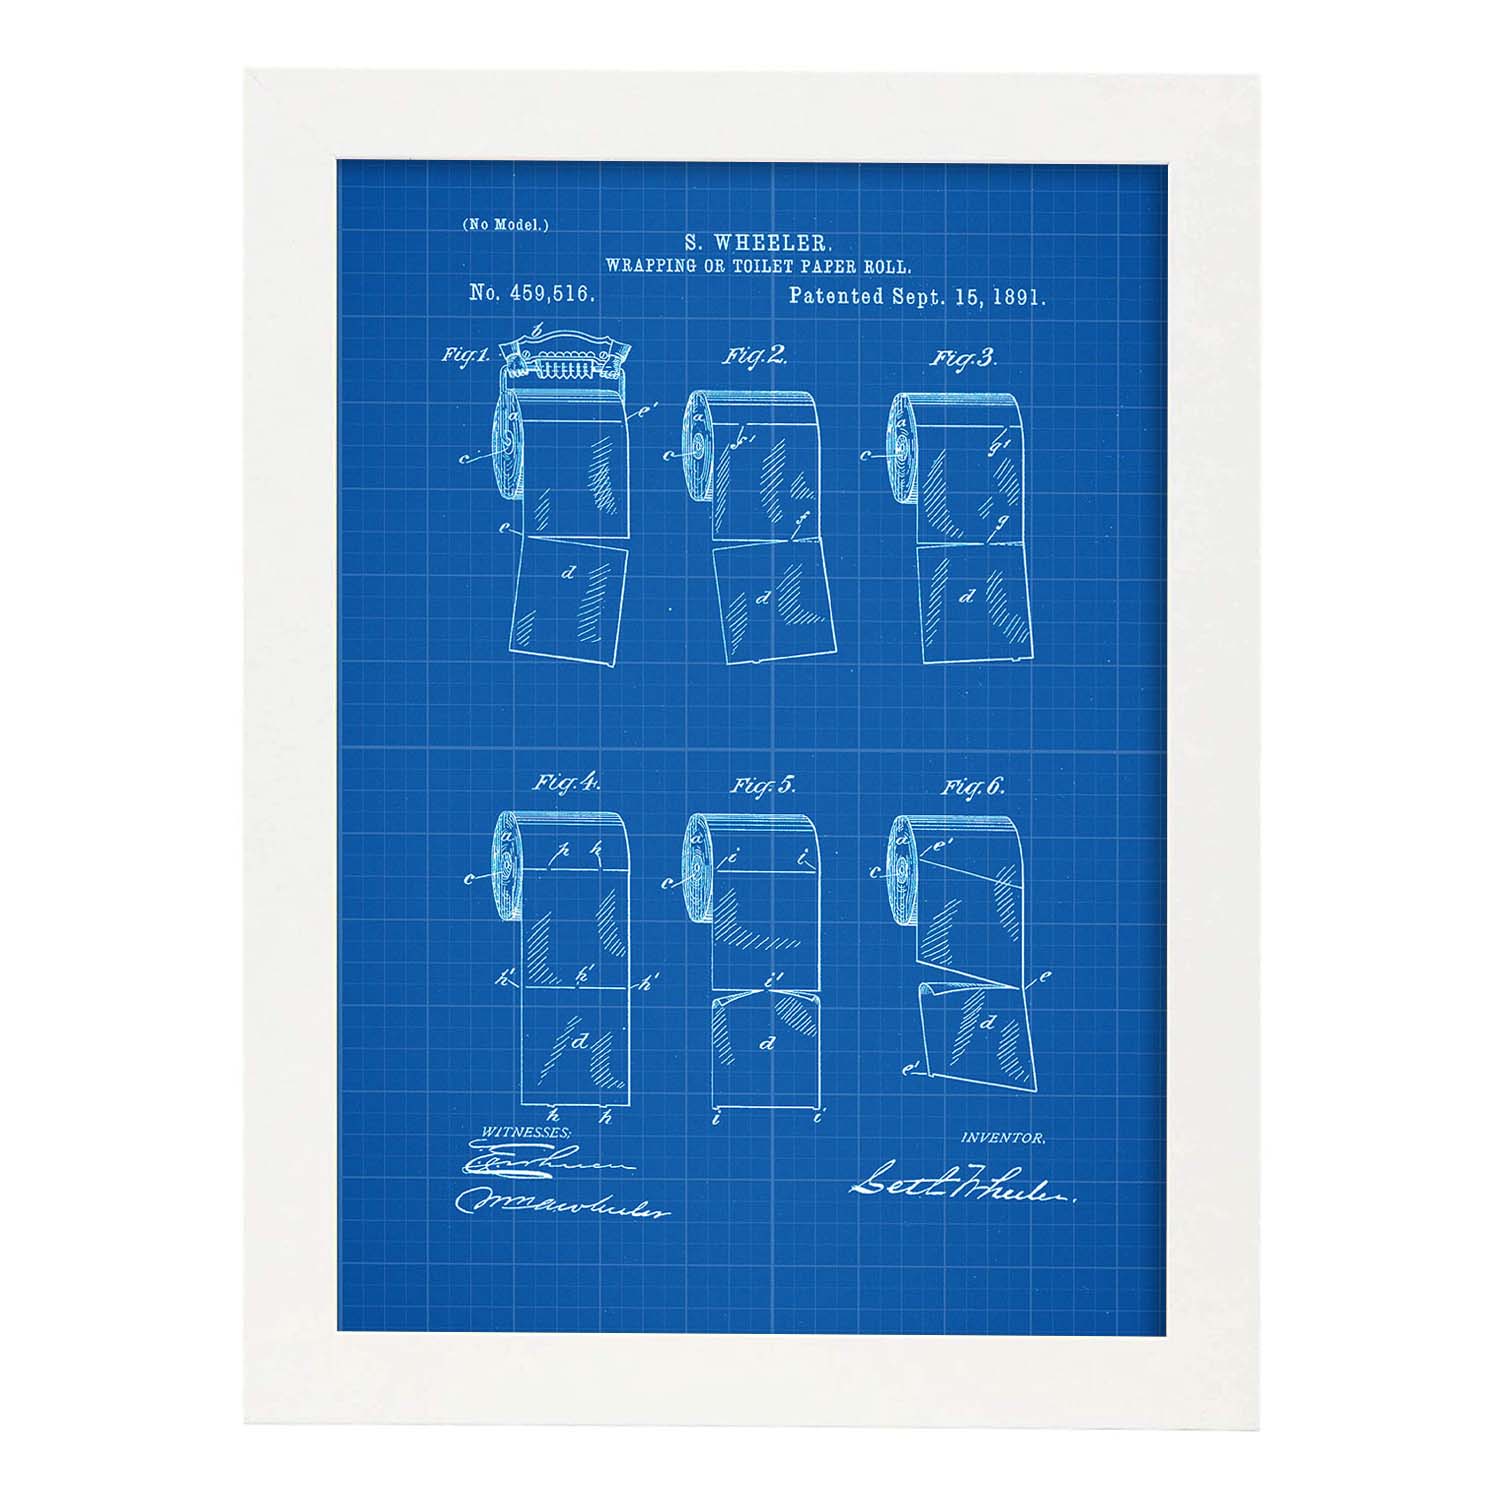 Poster con patente de Papel higienico 2. Lámina con diseño de patente antigua-Artwork-Nacnic-A4-Marco Blanco-Nacnic Estudio SL